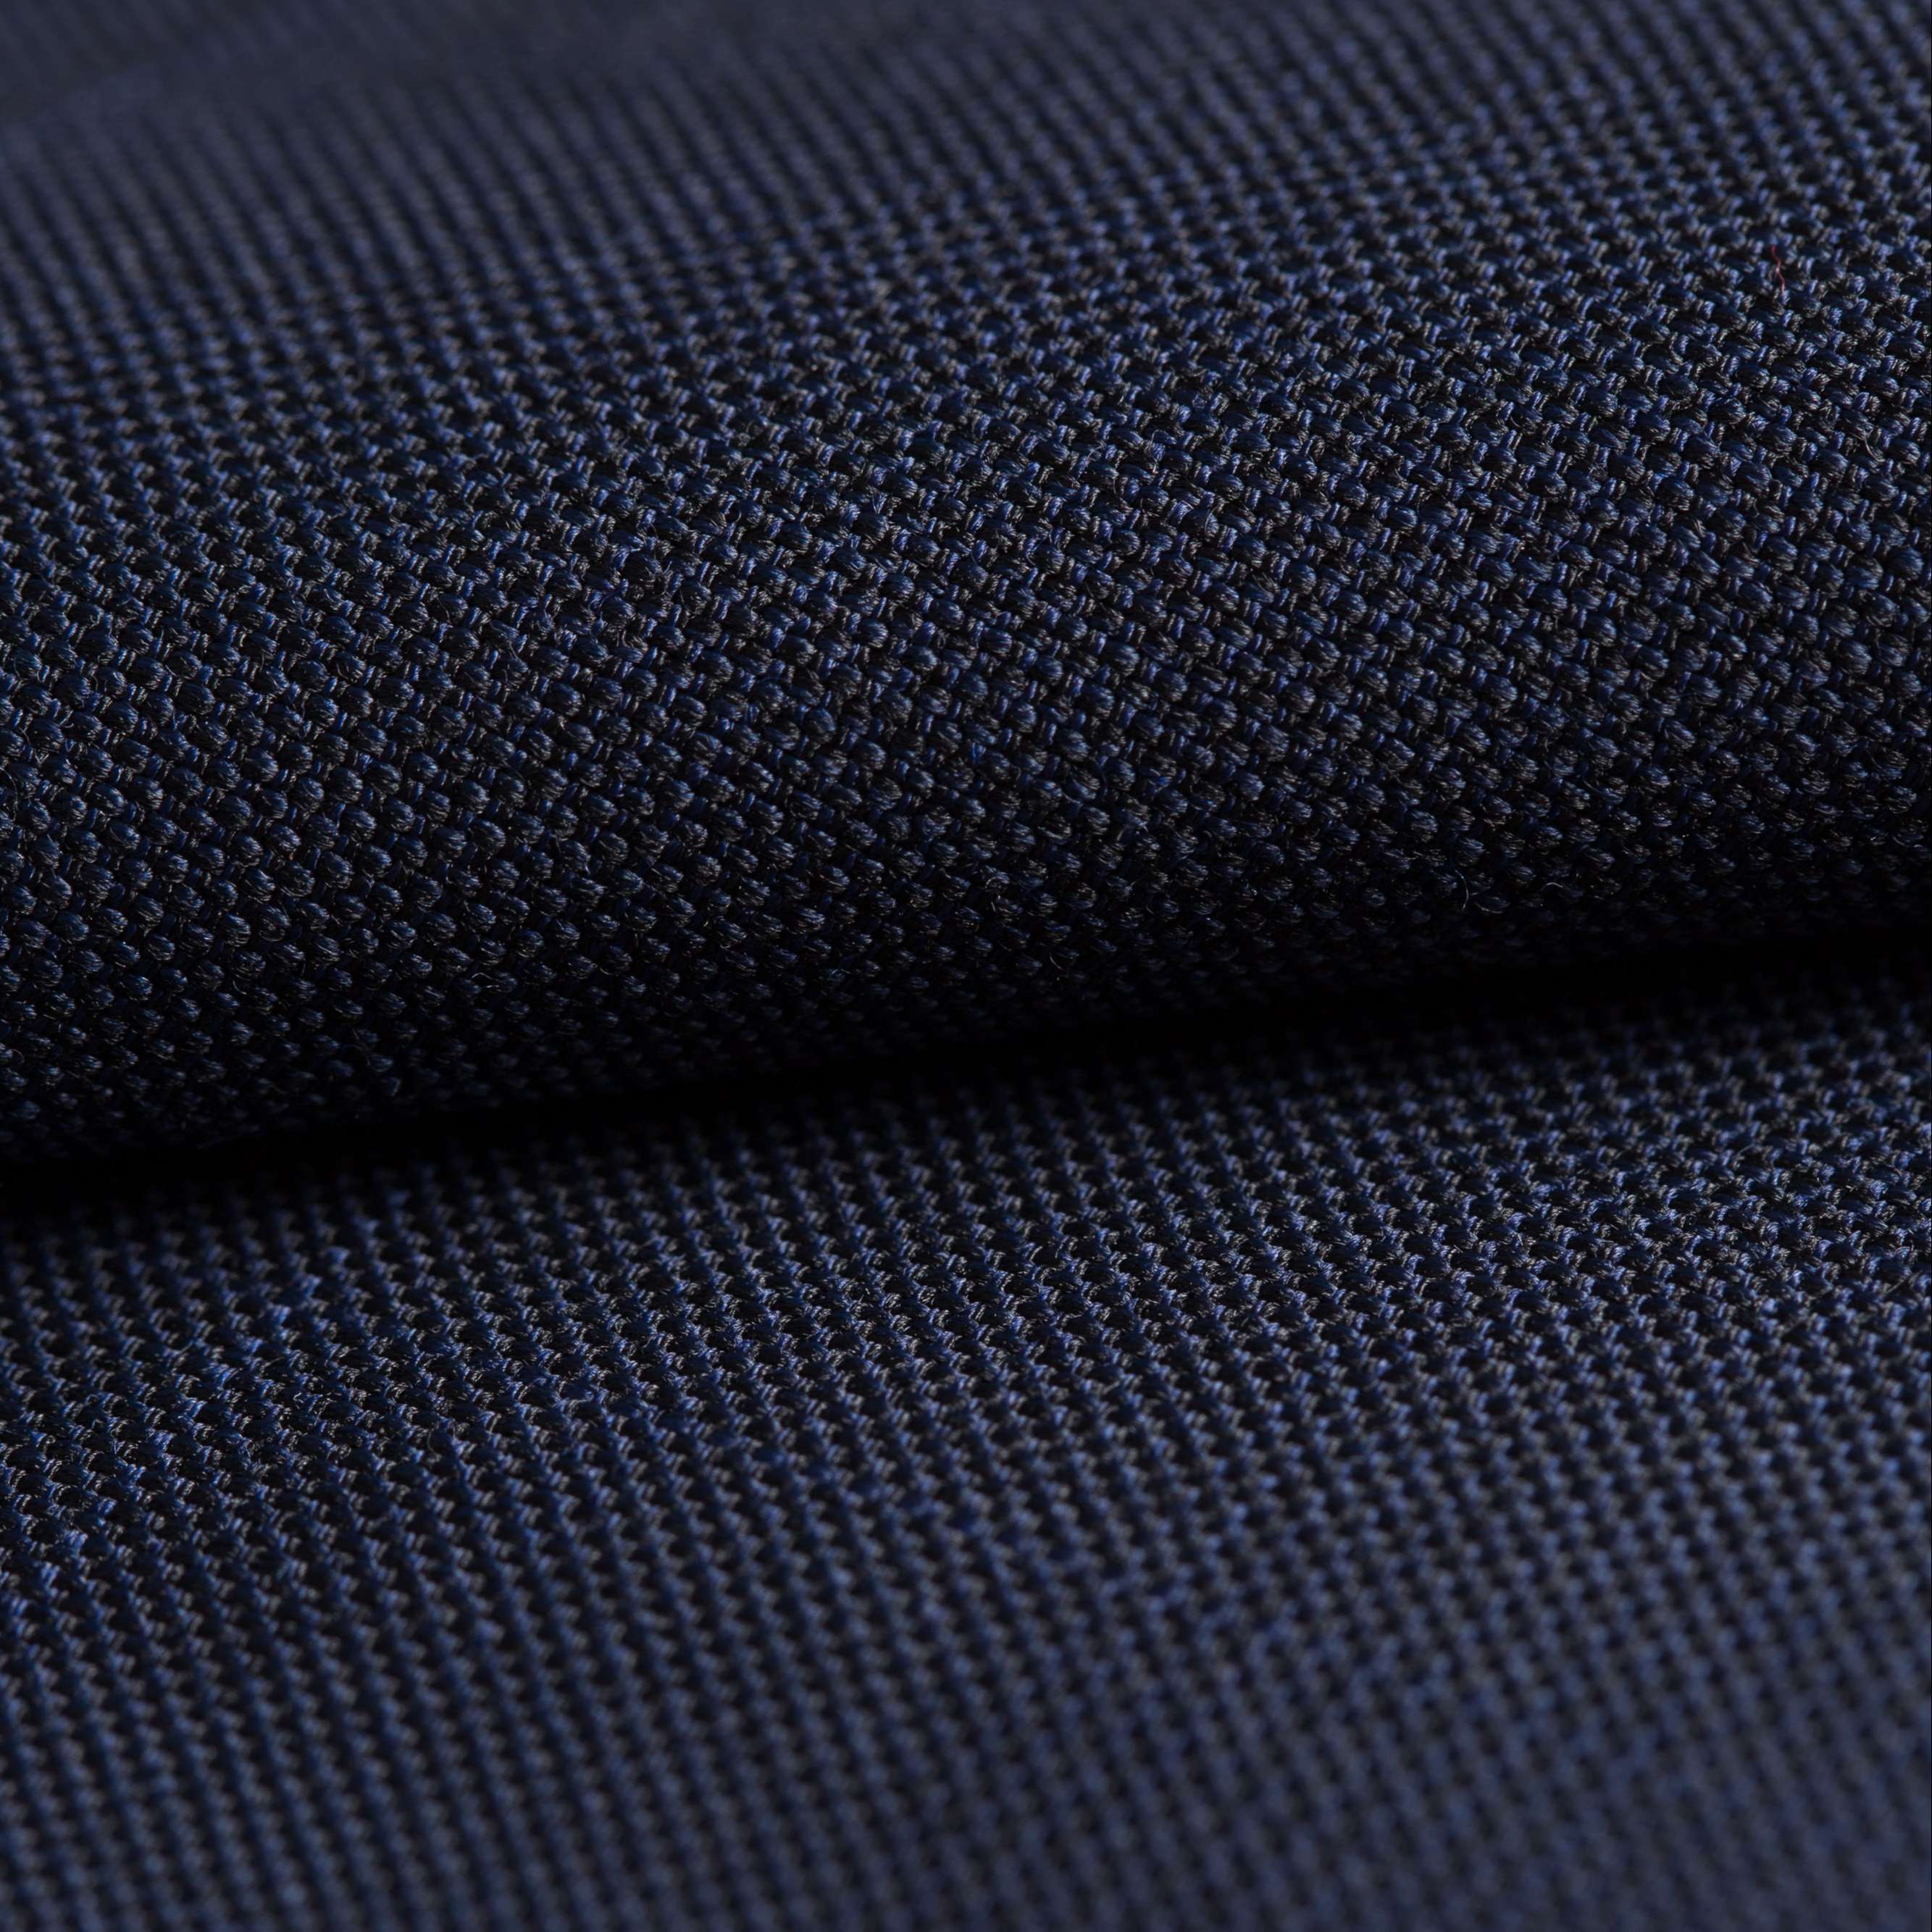 A crisp poised & polished navy blue sharkskin cloth